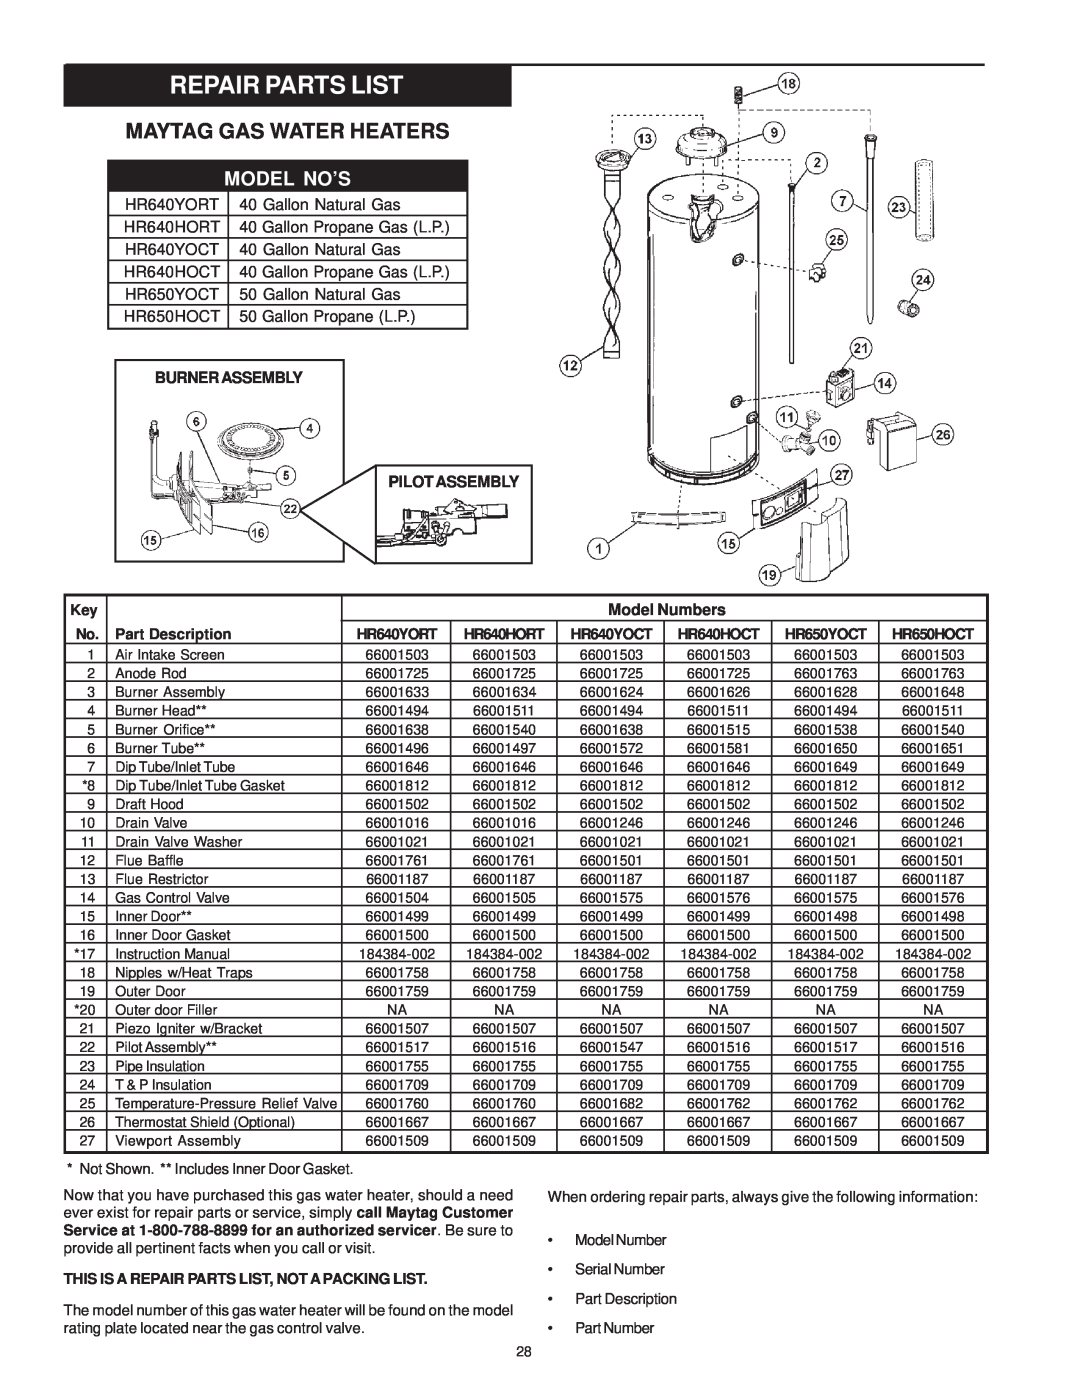 Maytag C3 manual Repair Parts List, Model No’S, Burner Assembly Pilotassembly, Model Numbers 